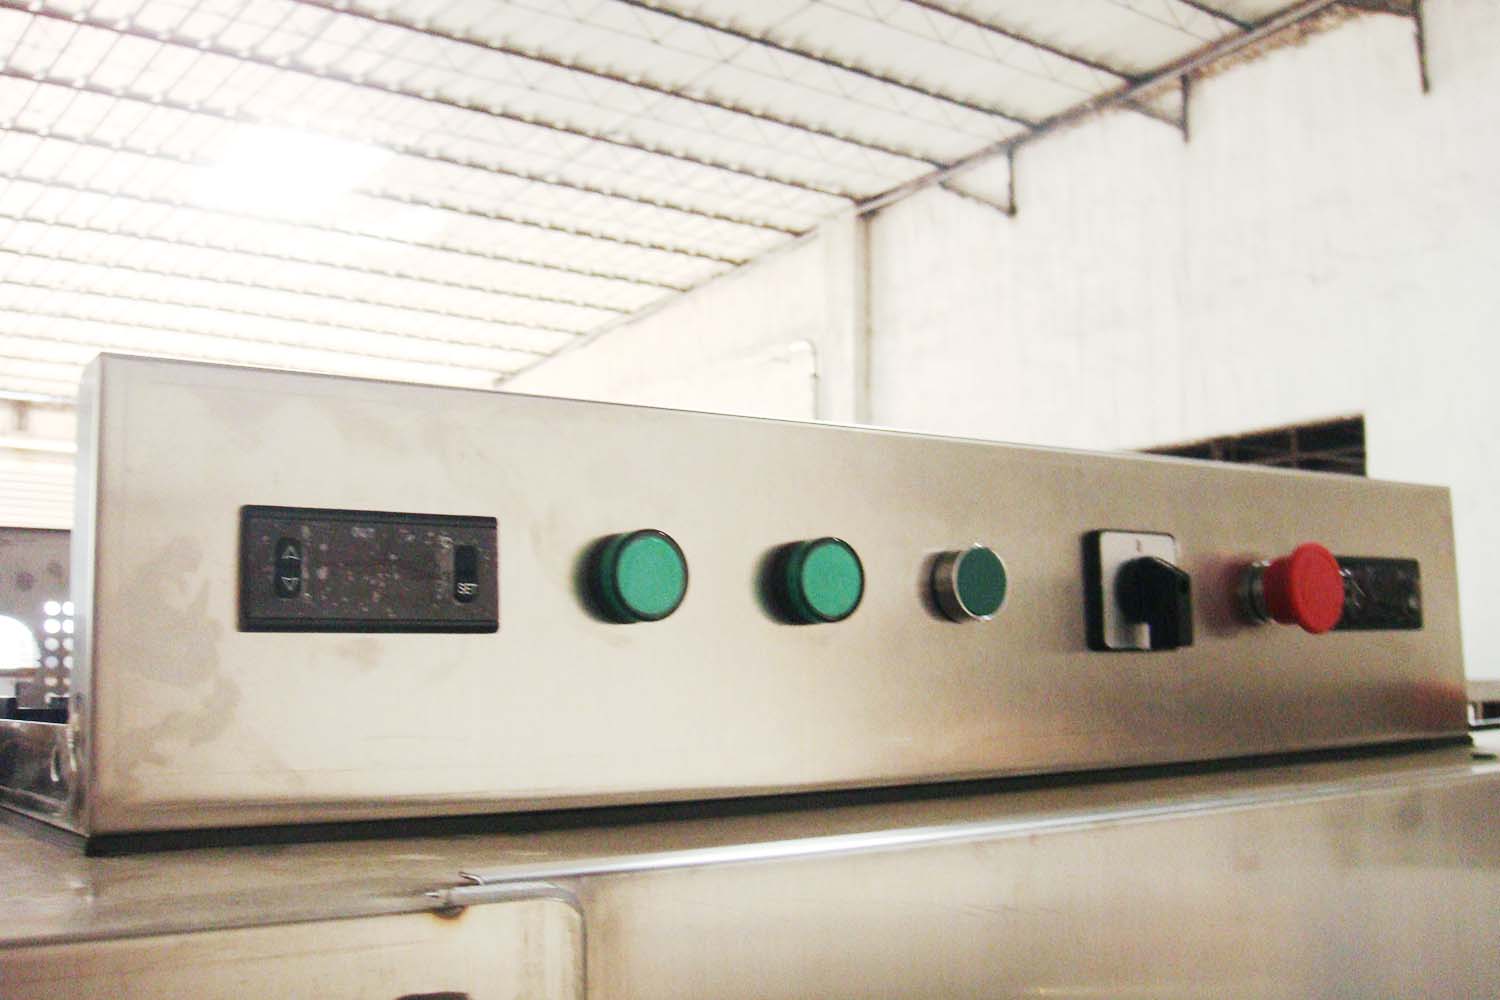 Control Panel of Dishwasher TT-K134